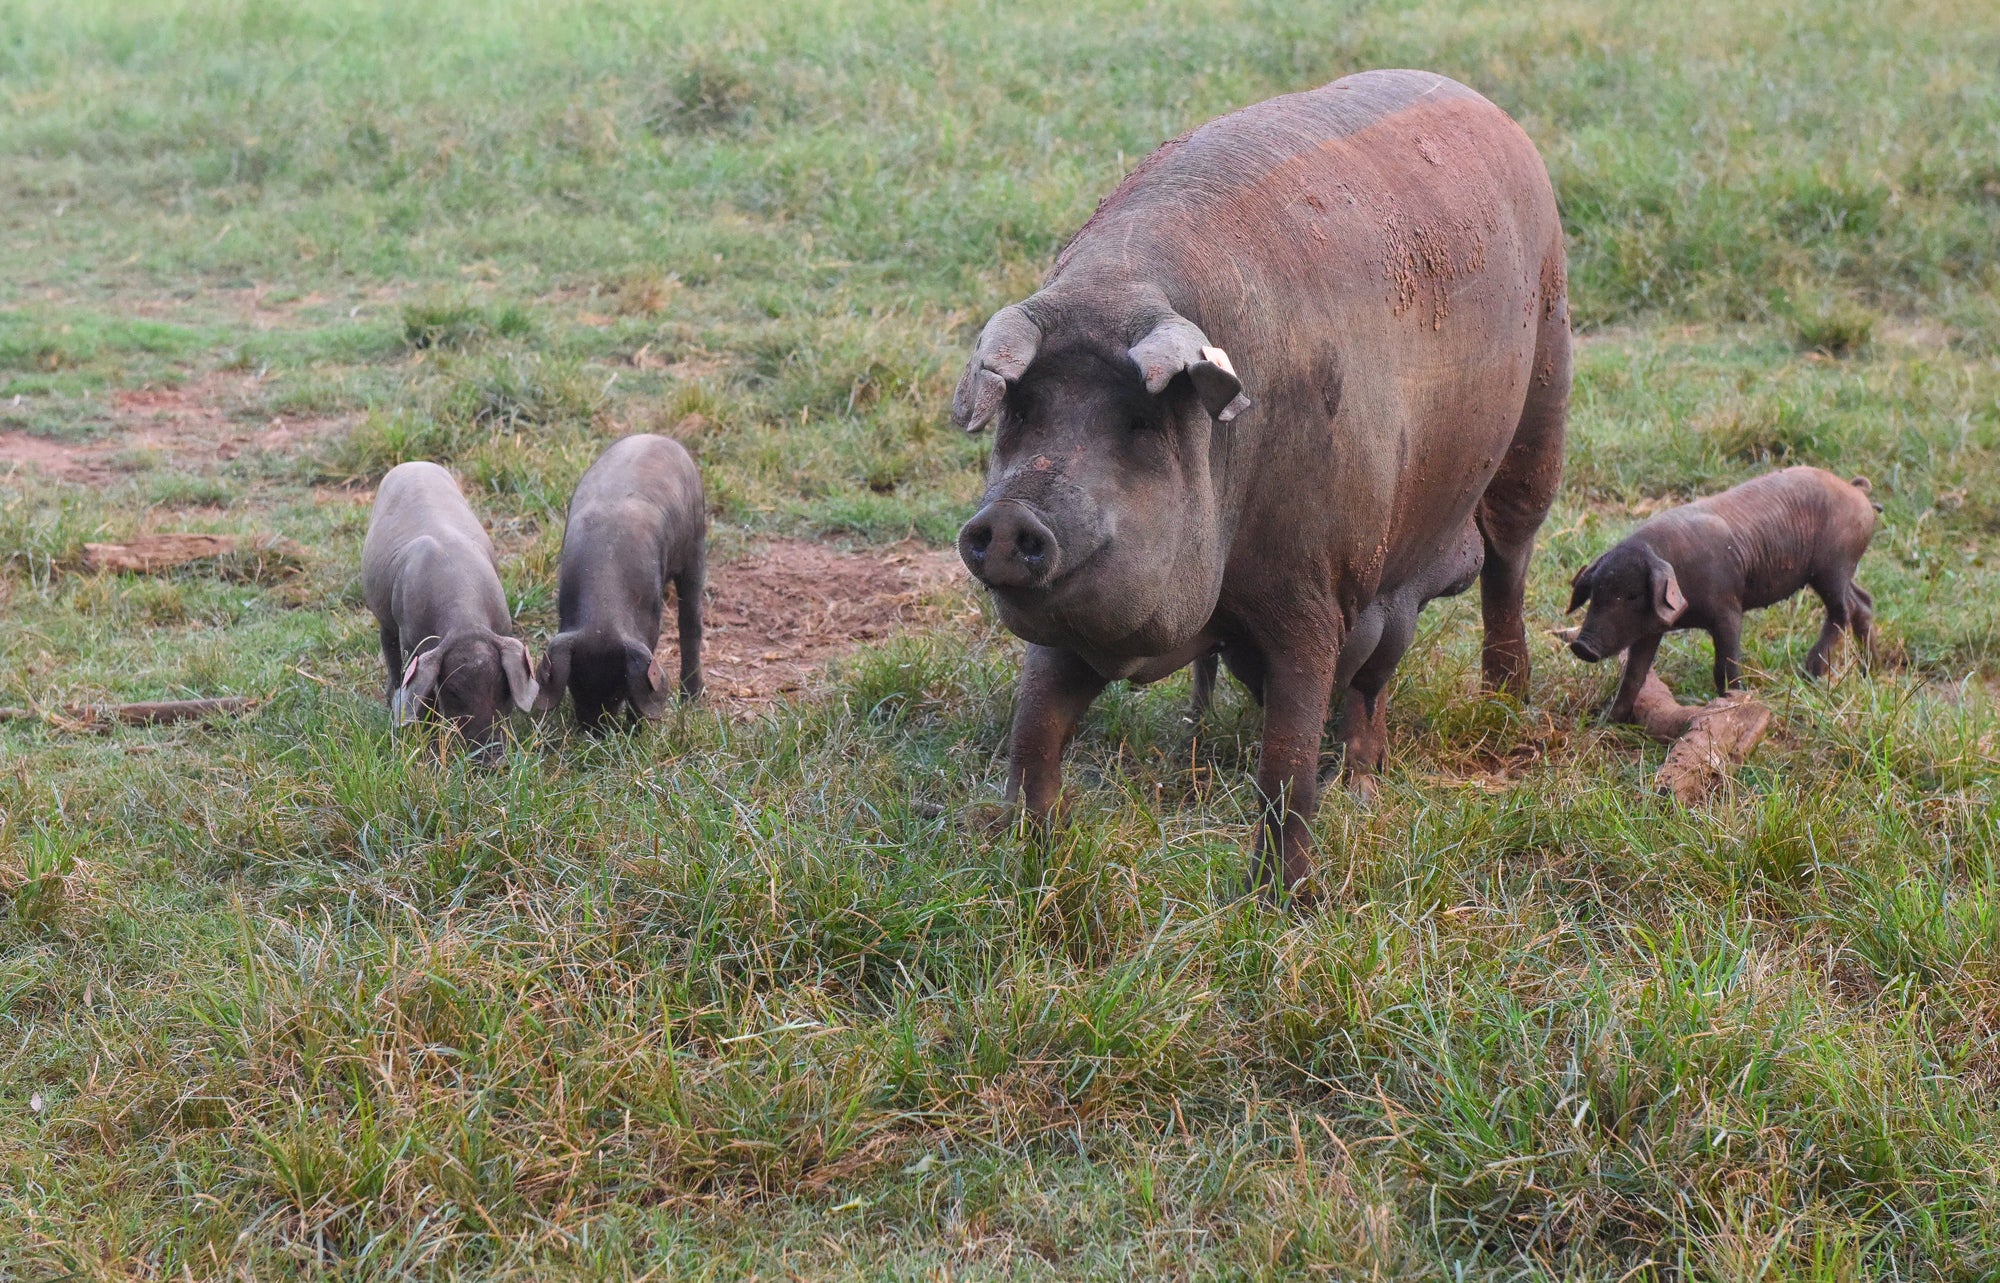 American Grass Fed Association: Pastured Pork